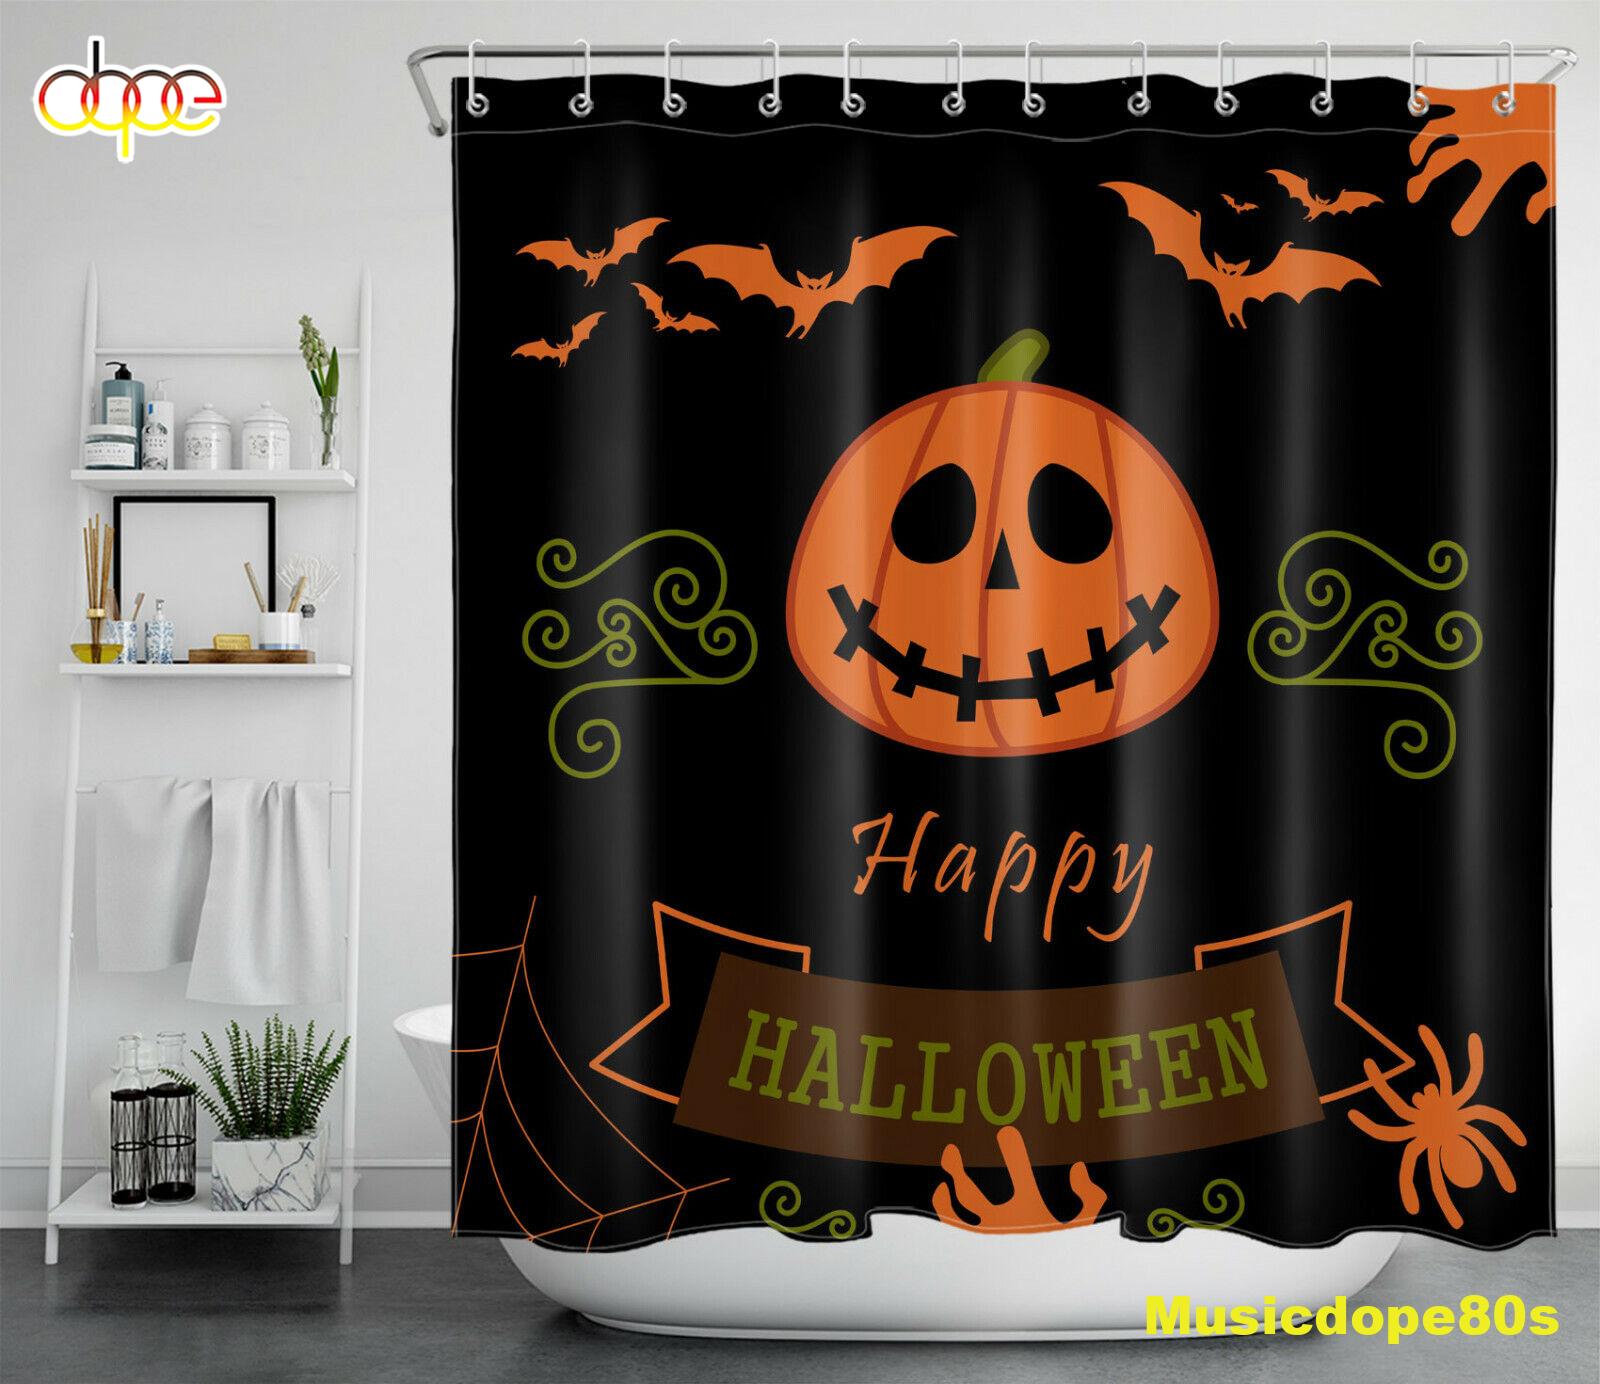 Happy Halloween Shower Curtain Funny Grimace Pumpkin Bats Spider